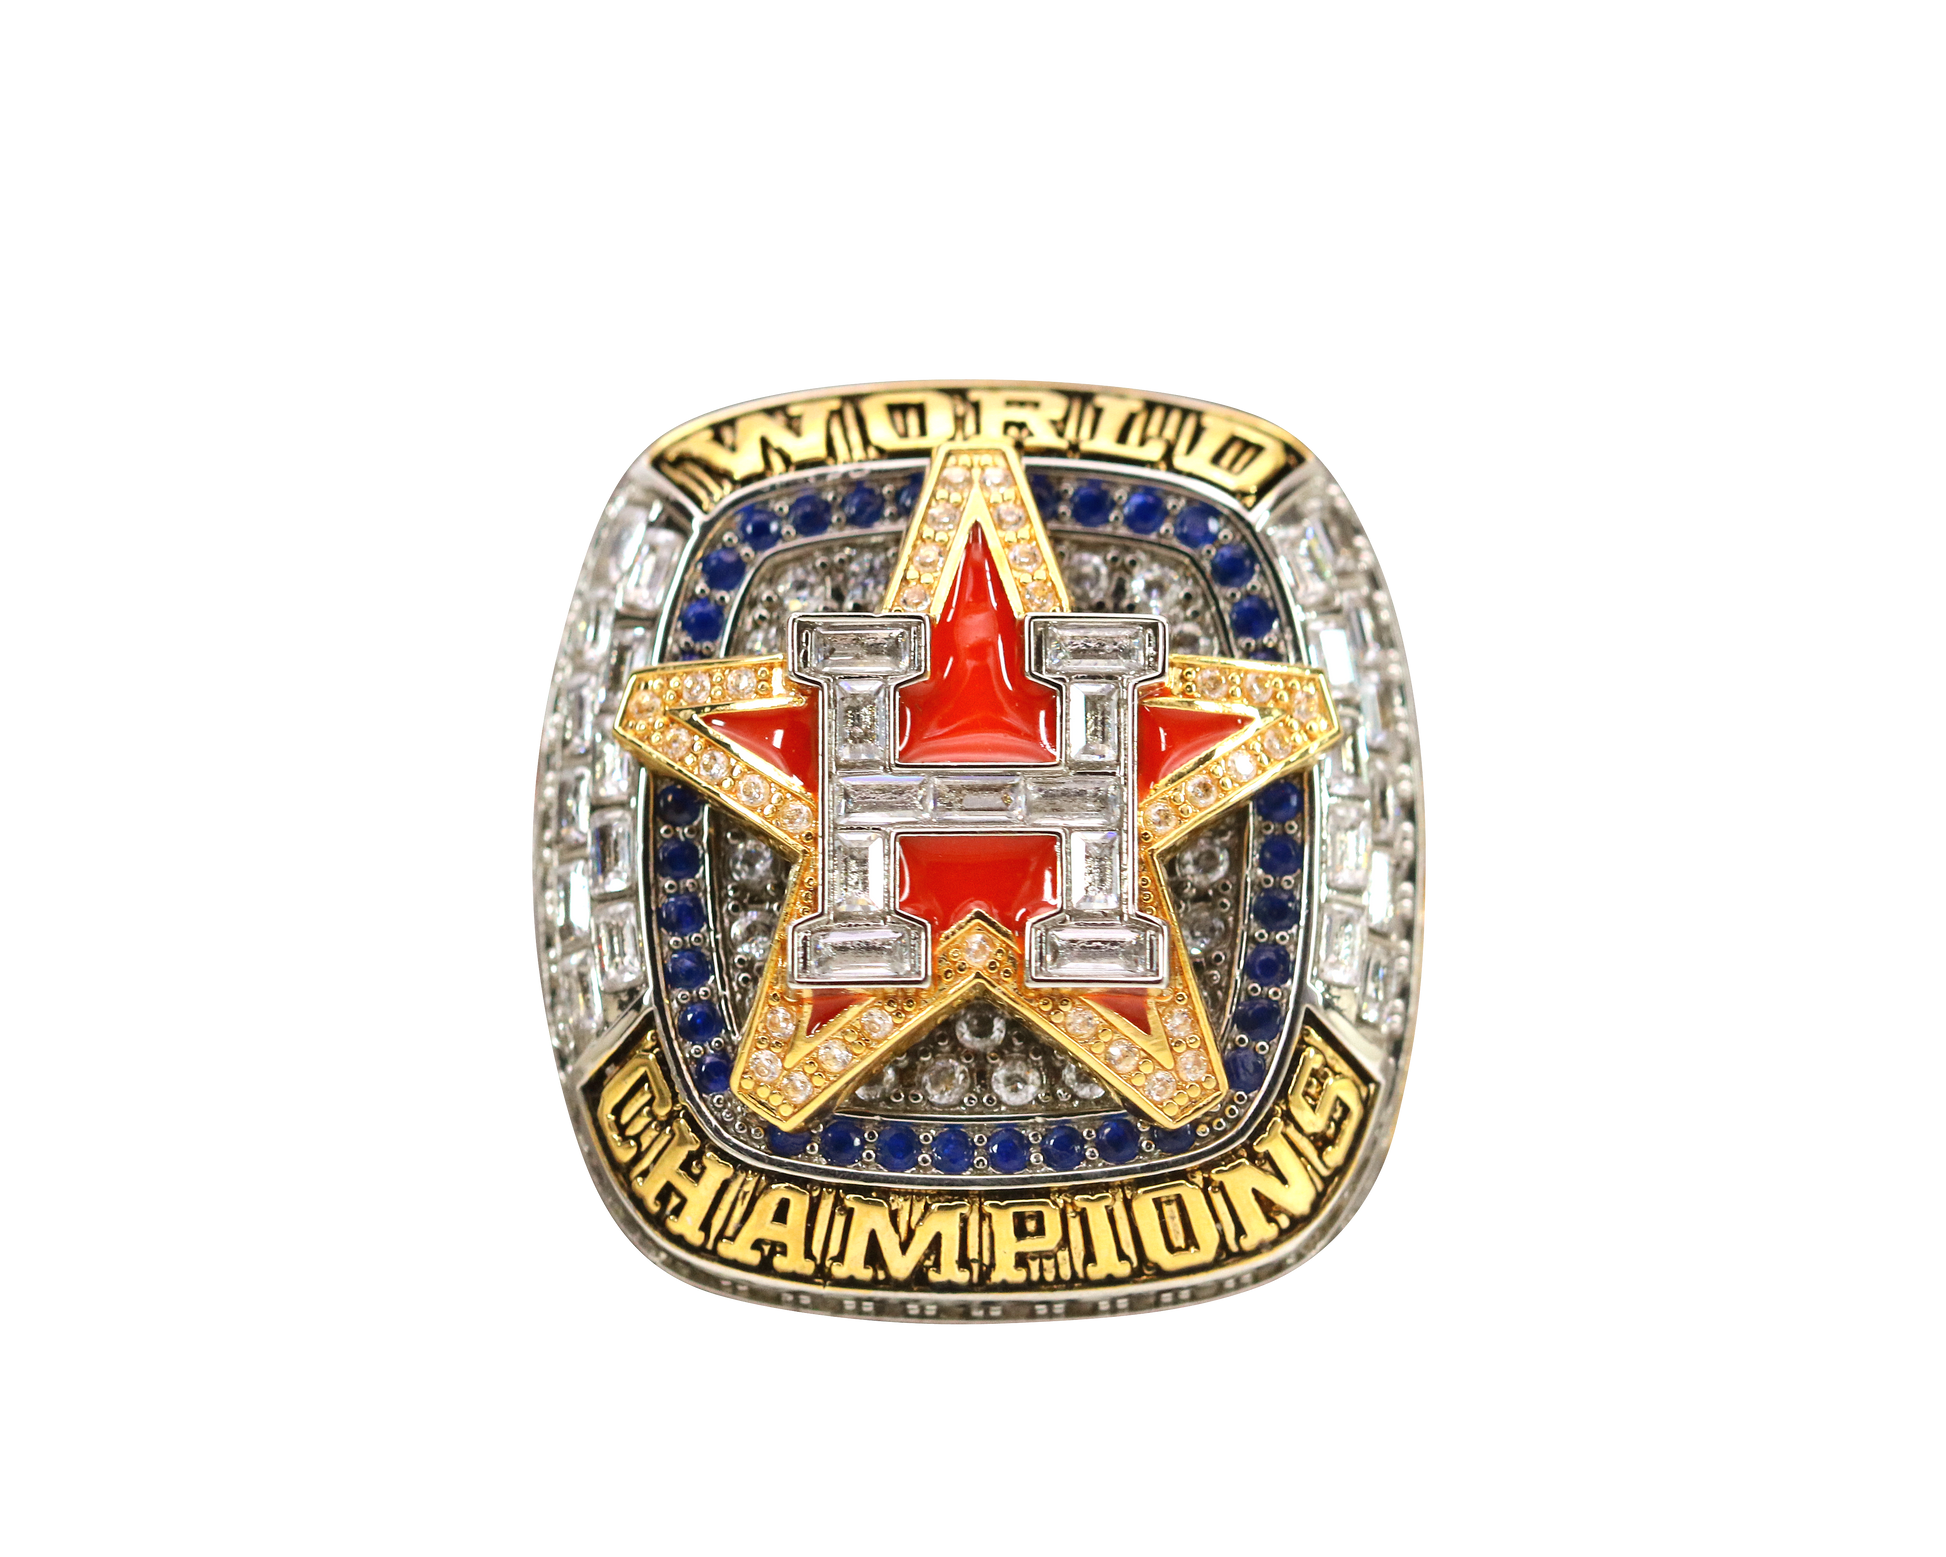 Astros 2017 World Championship Ring